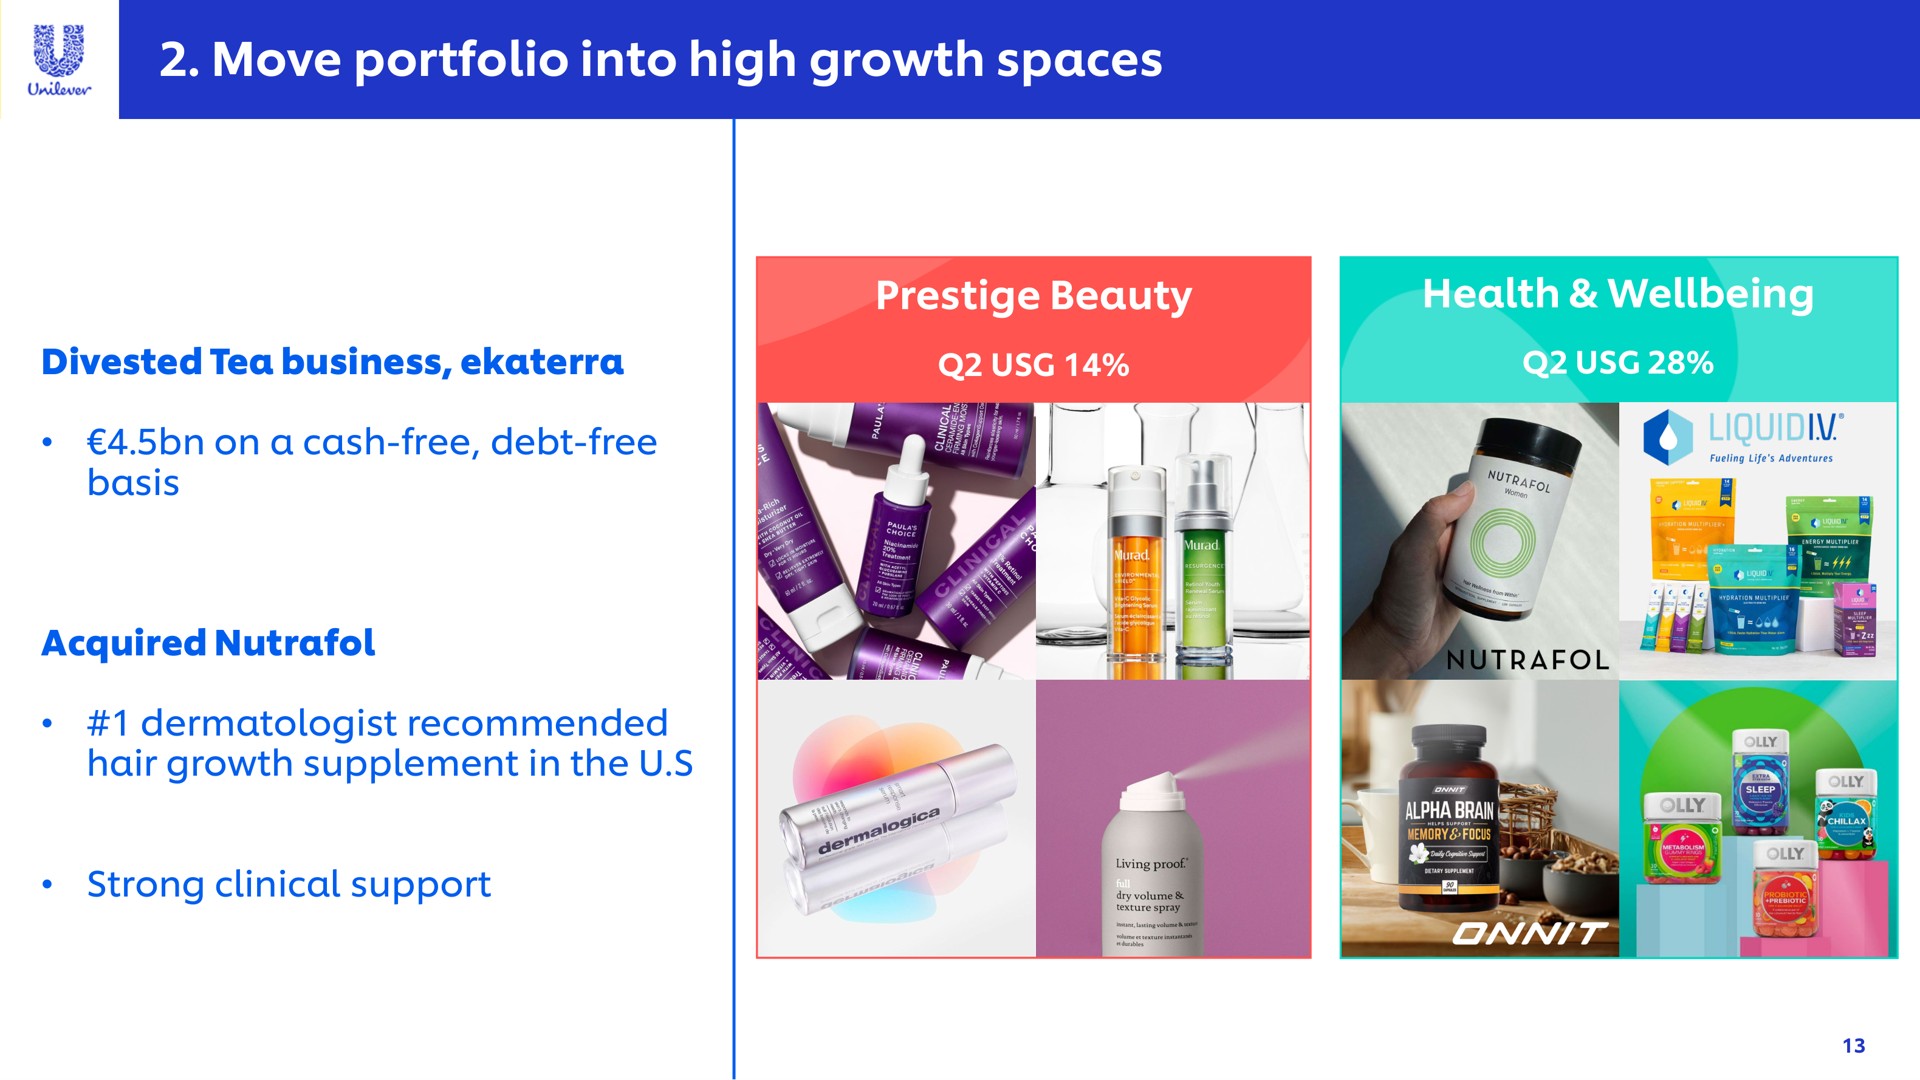 move portfolio into high growth spaces | Unilever